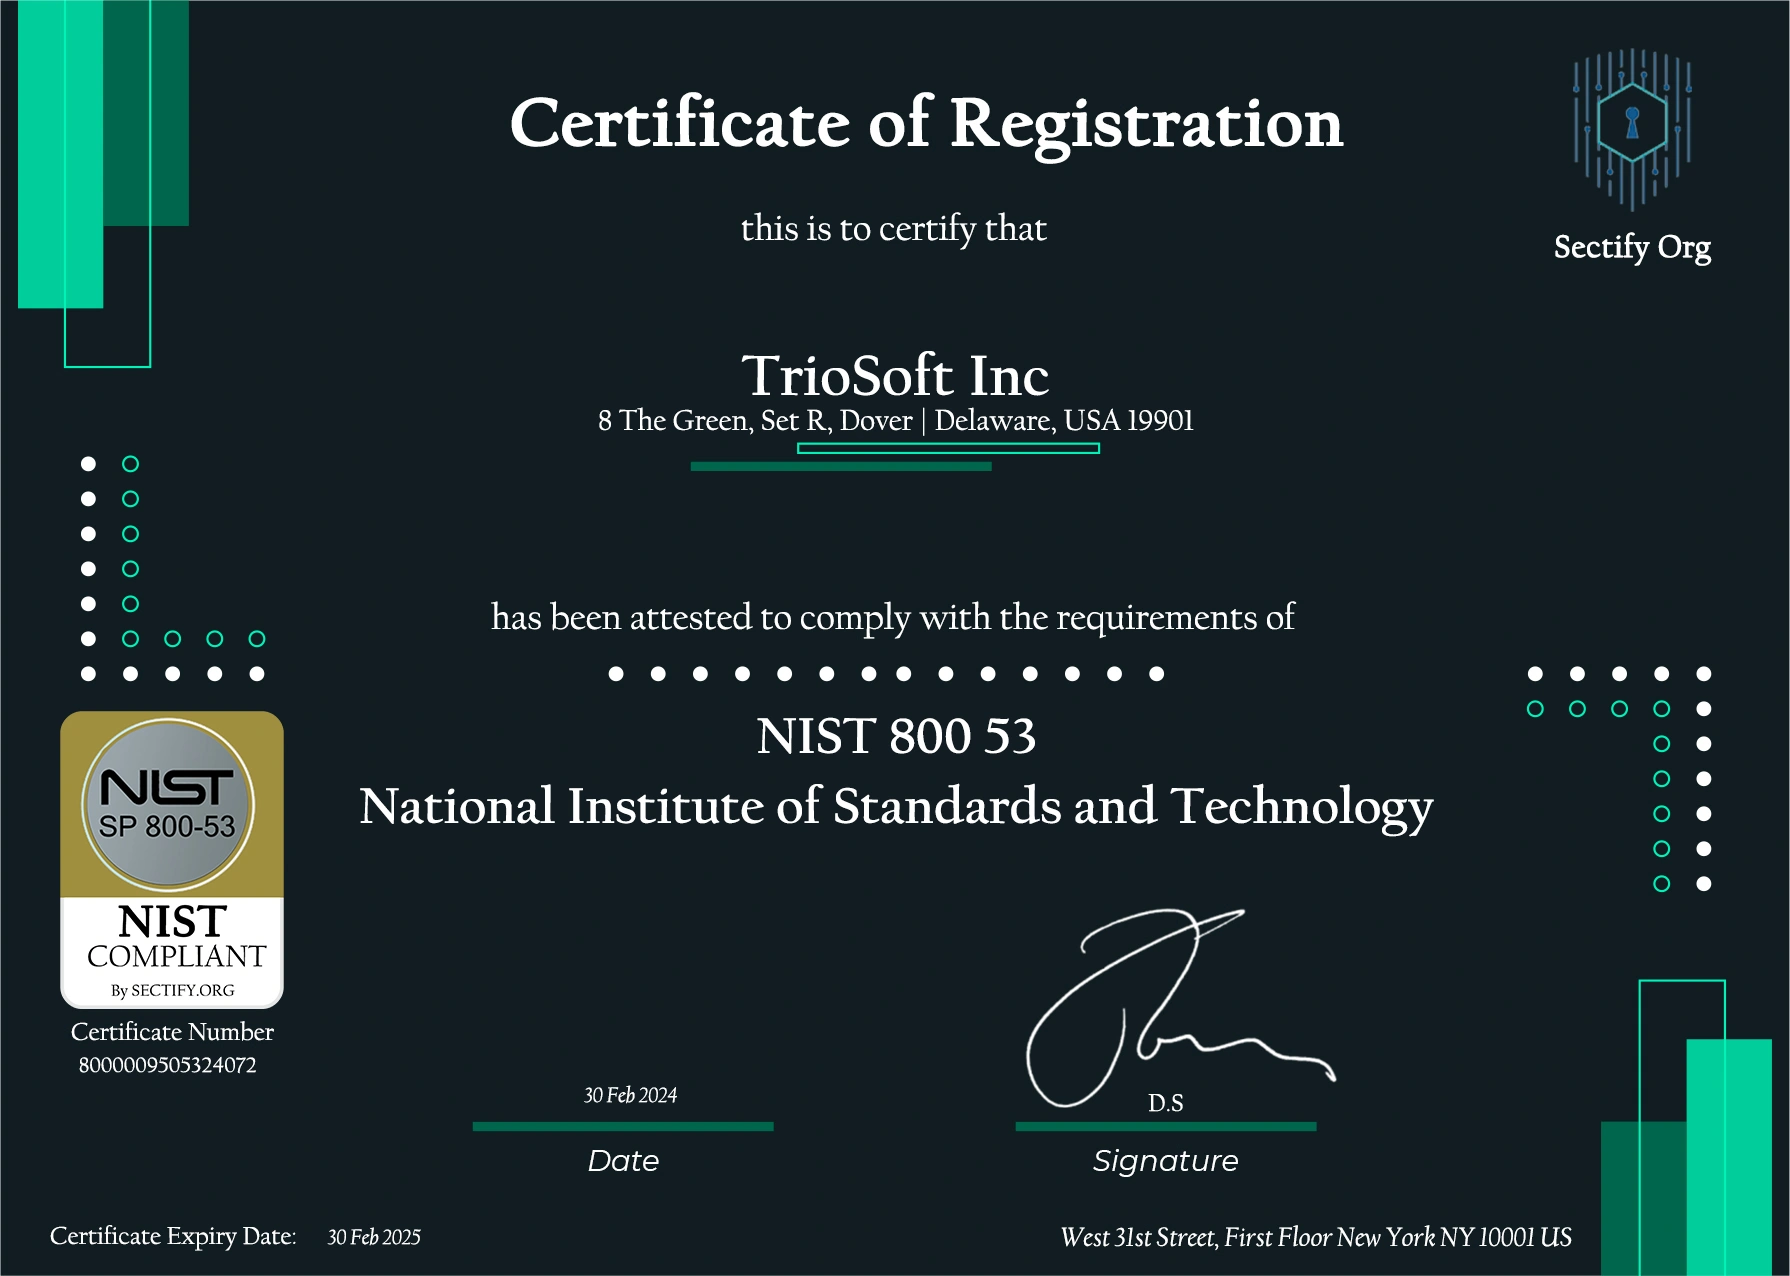 Trio's Certification of NIST 800-53